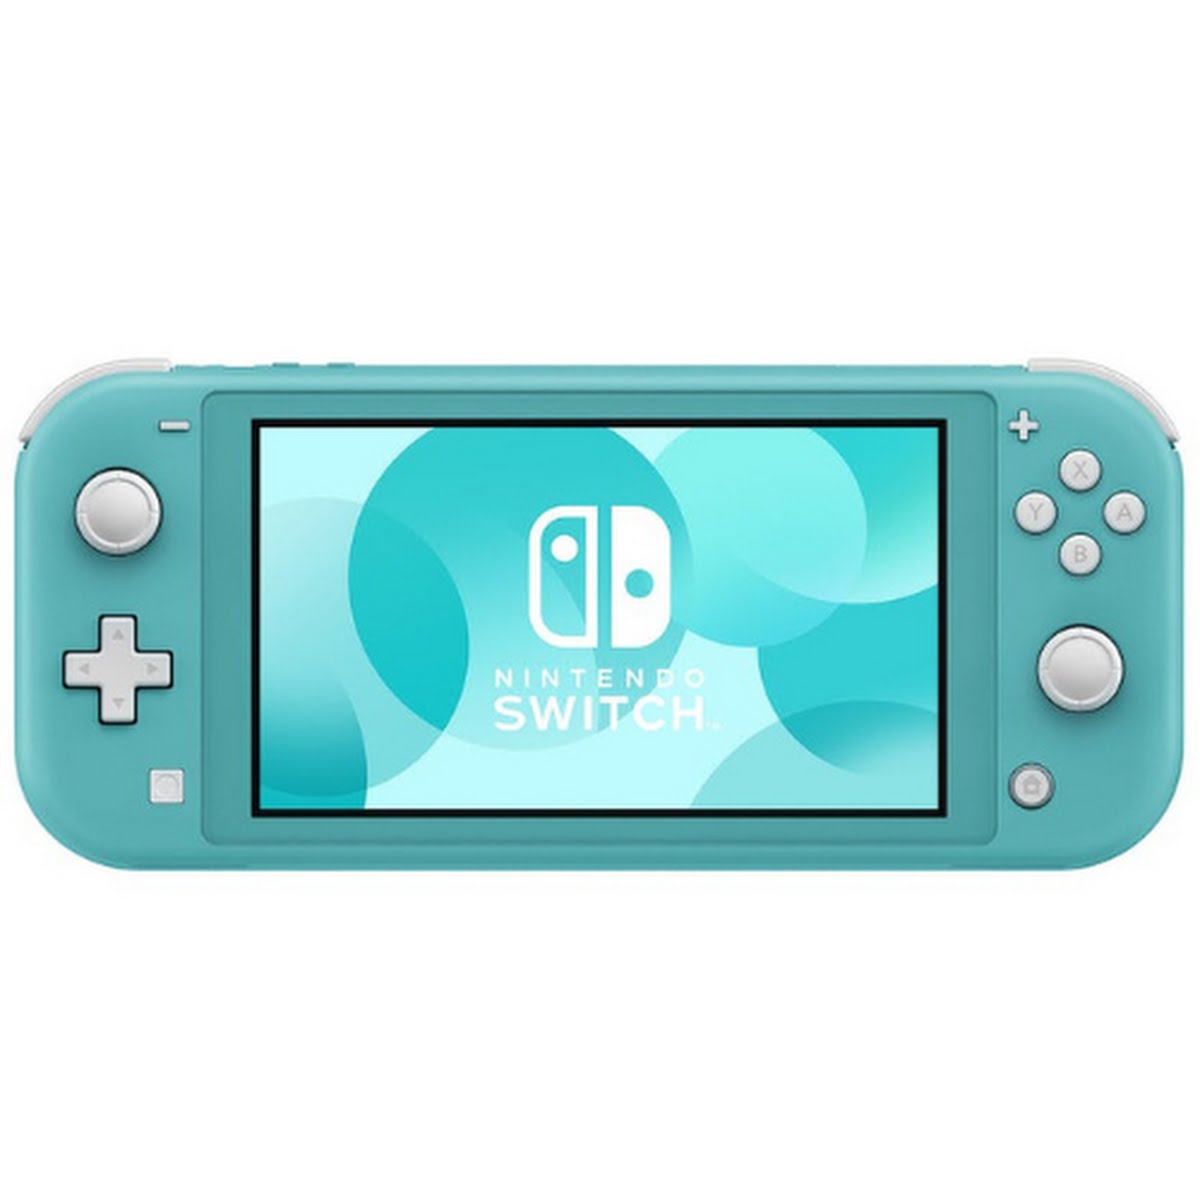 Nintendo Switch Lite, €239.95